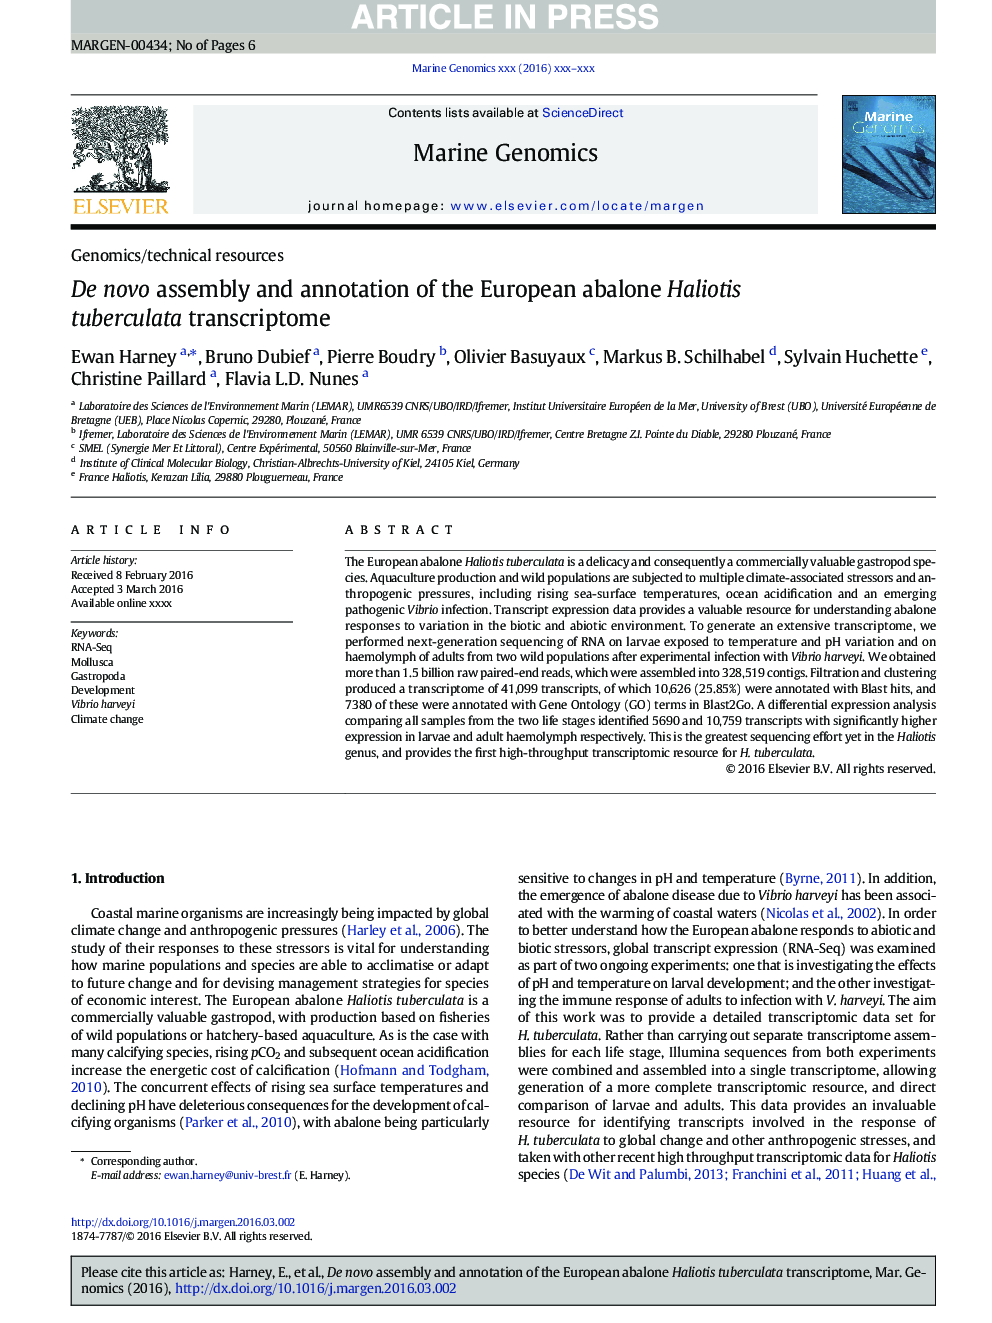 De novo assembly and annotation of the European abalone Haliotis tuberculata transcriptome